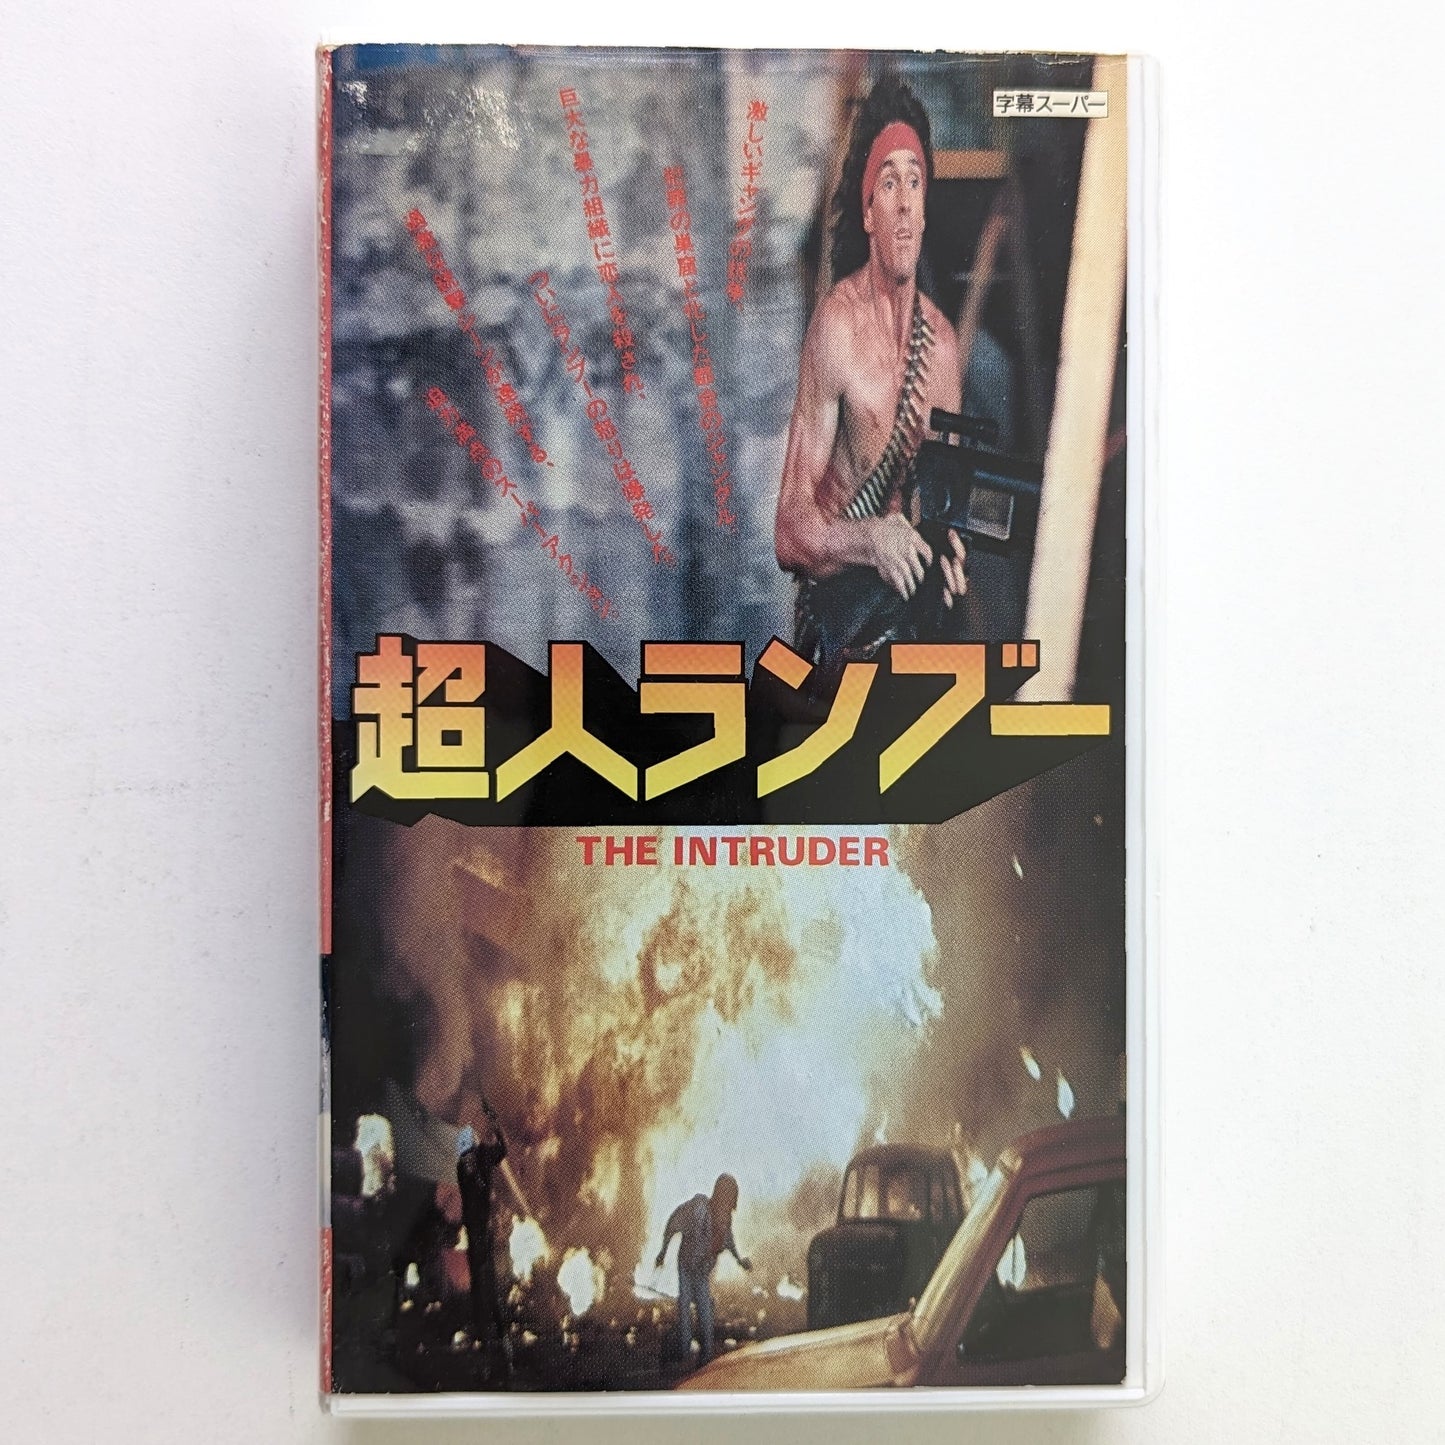 Intruder, The (1985) Japanese VHS